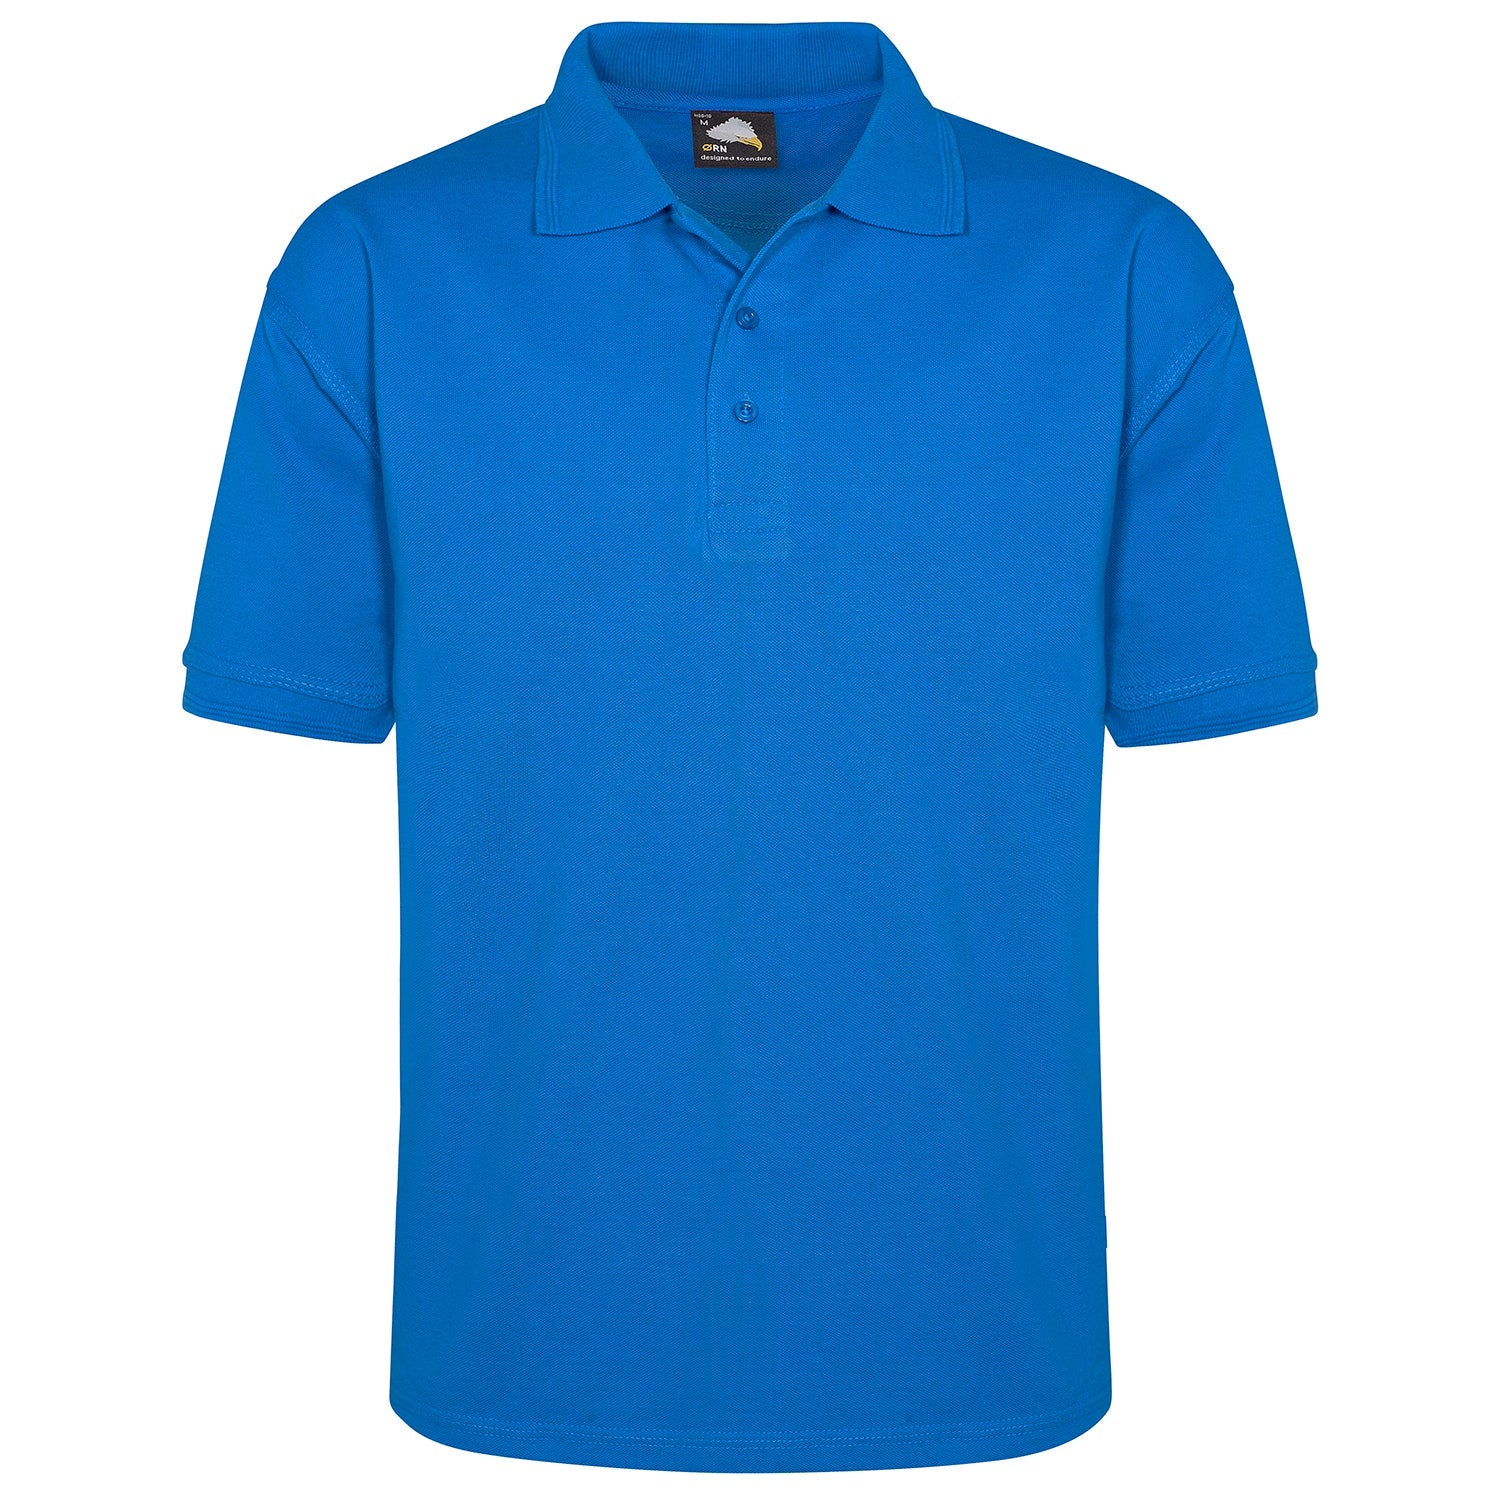 ORN Eagle Poloshirt - Reflex Blue